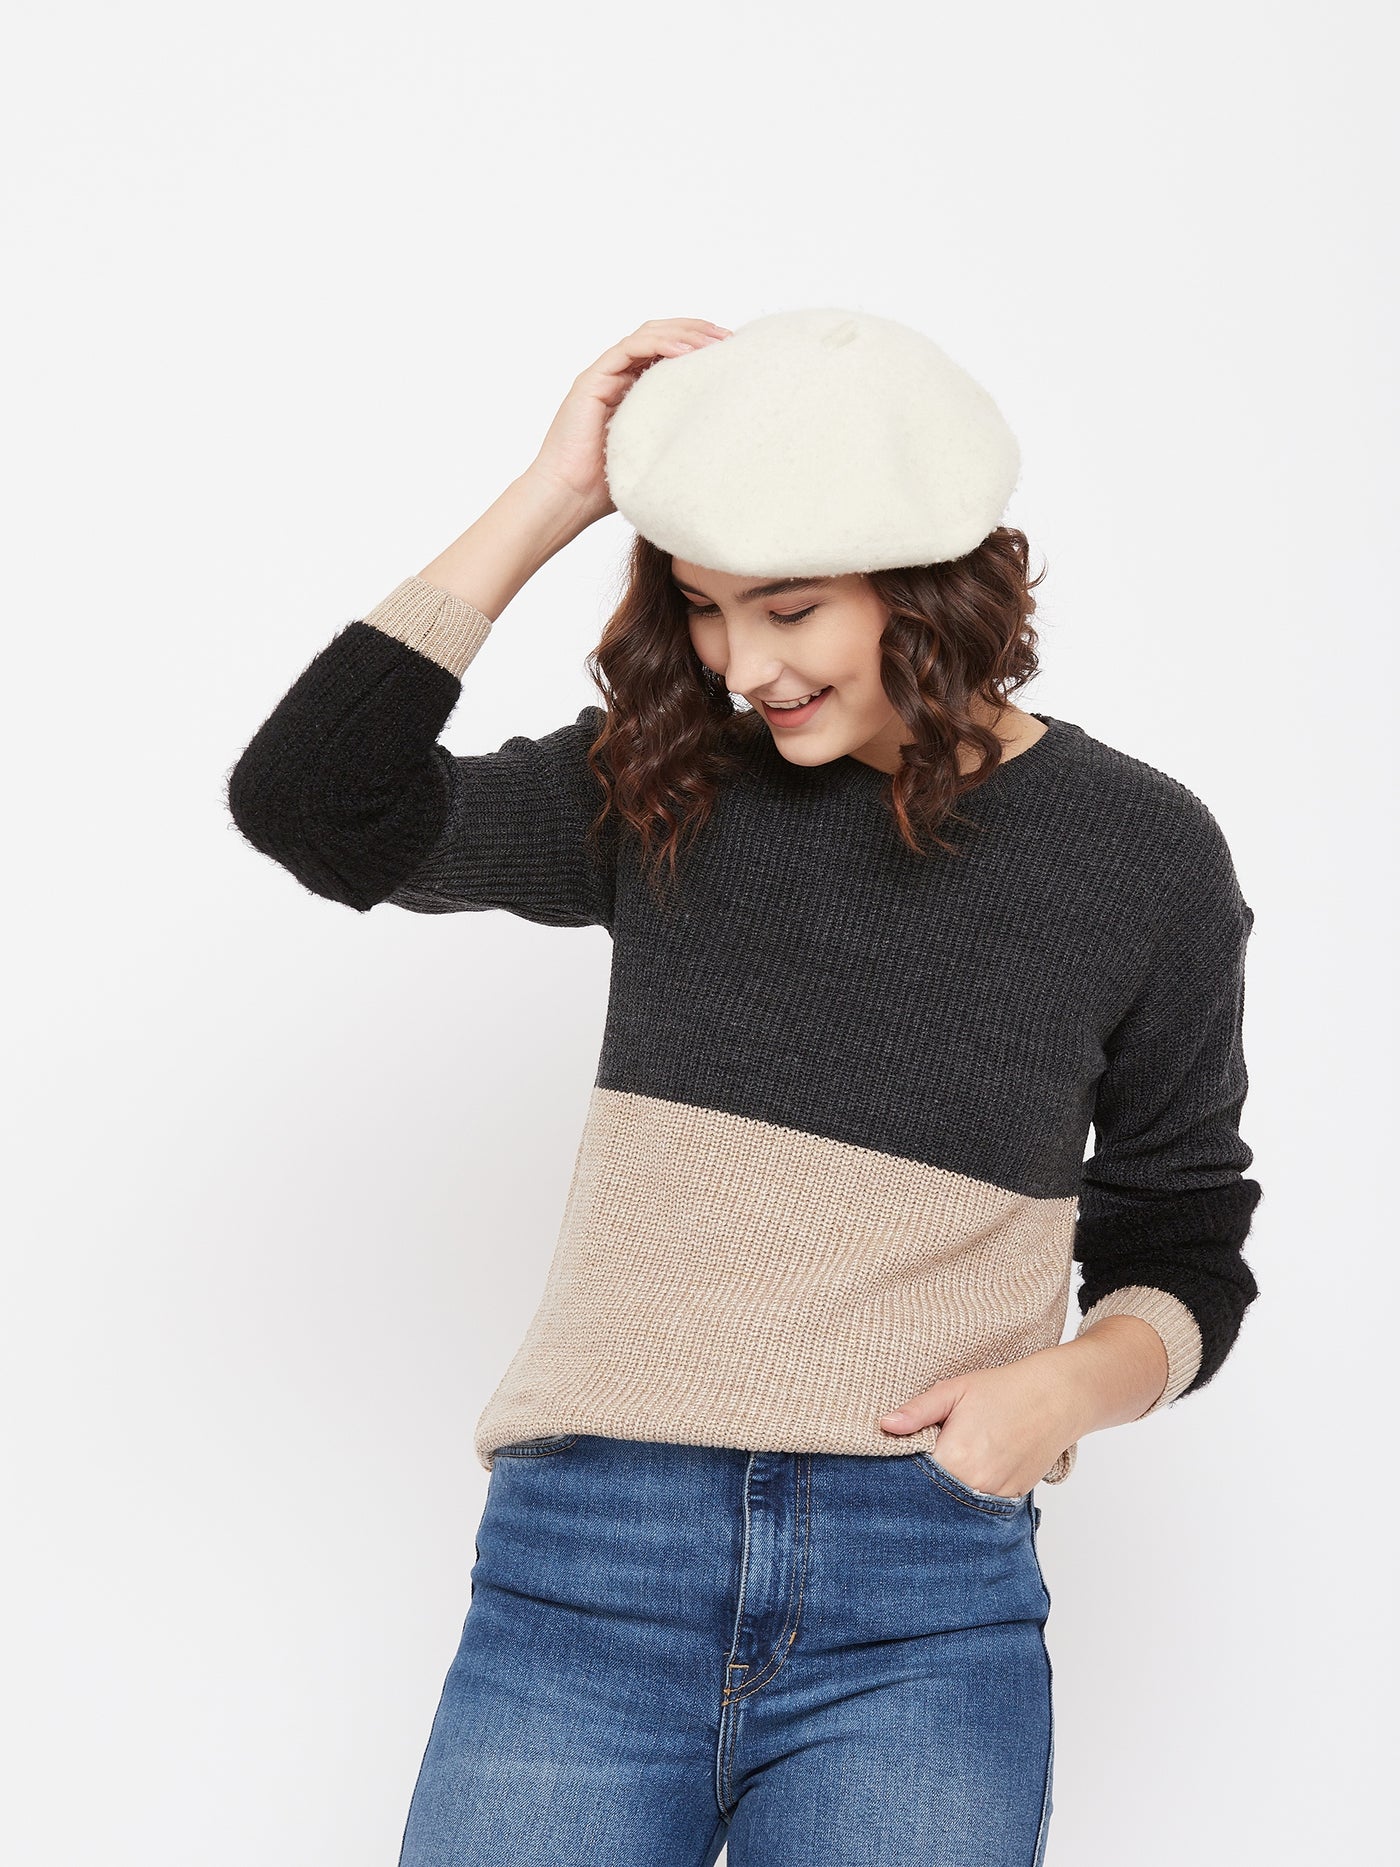 Grey Colorblocked Round Neck Sweater - Women Sweaters